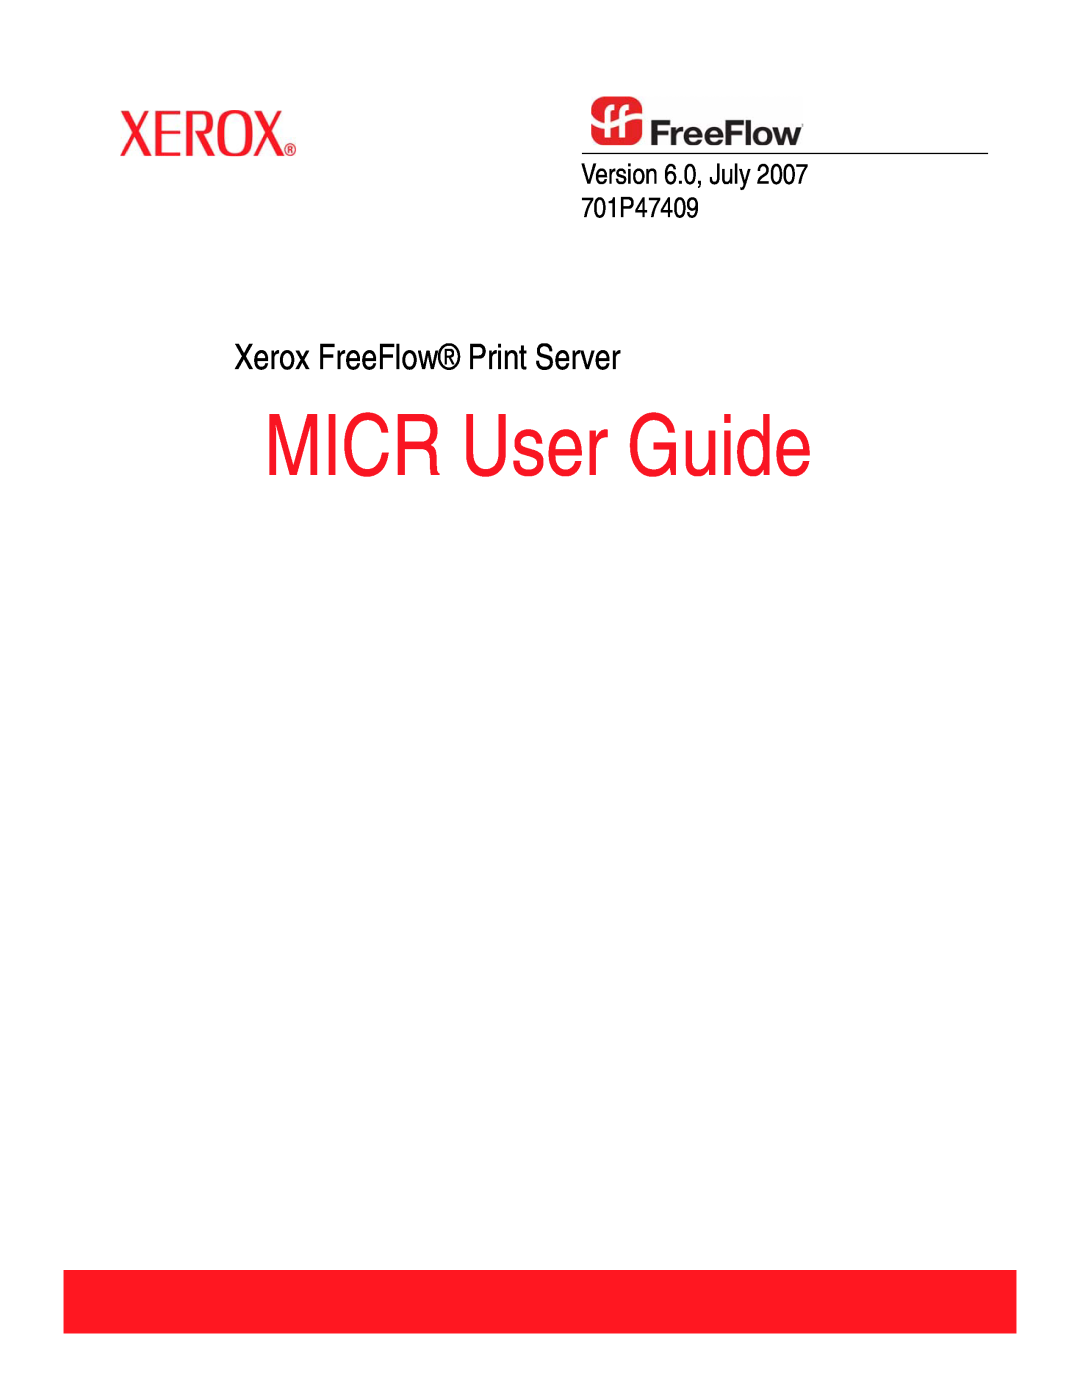 Xerox manual MICR User Guide, Xerox FreeFlow Print Server, Version 6.0, July 2007 701P47409 